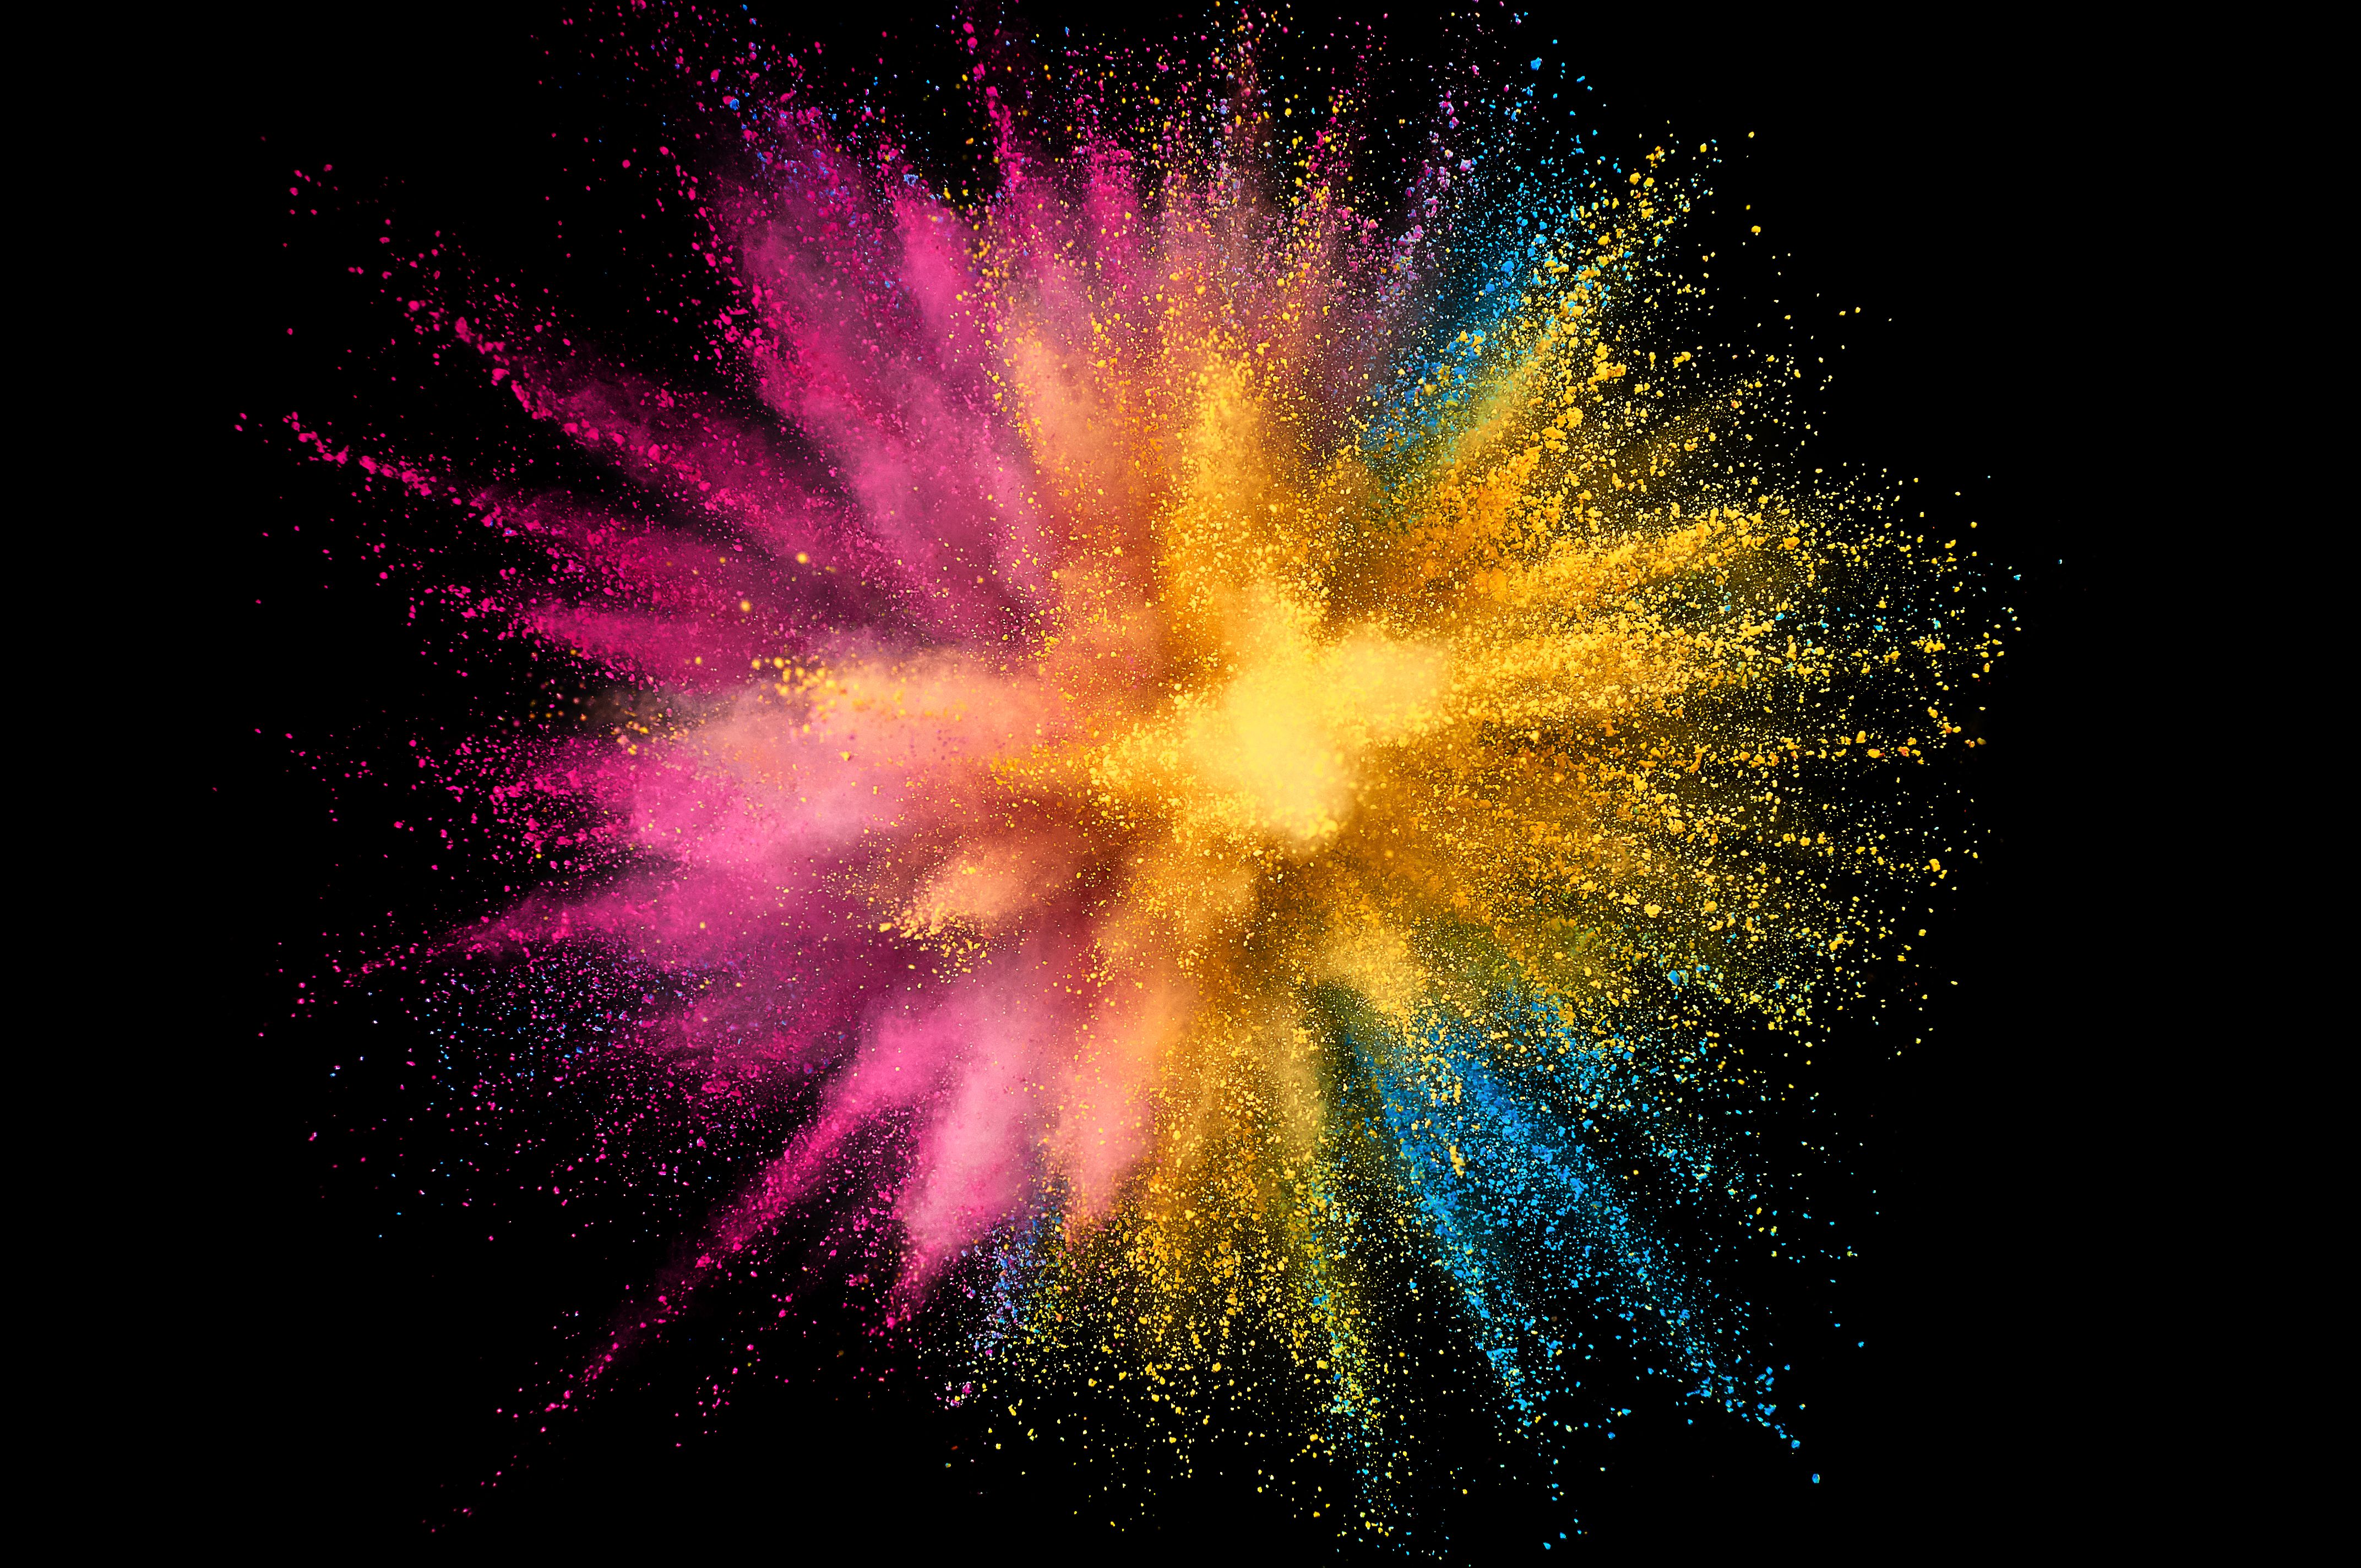 Pink, orange, yellow, purple, and blue powder explosion